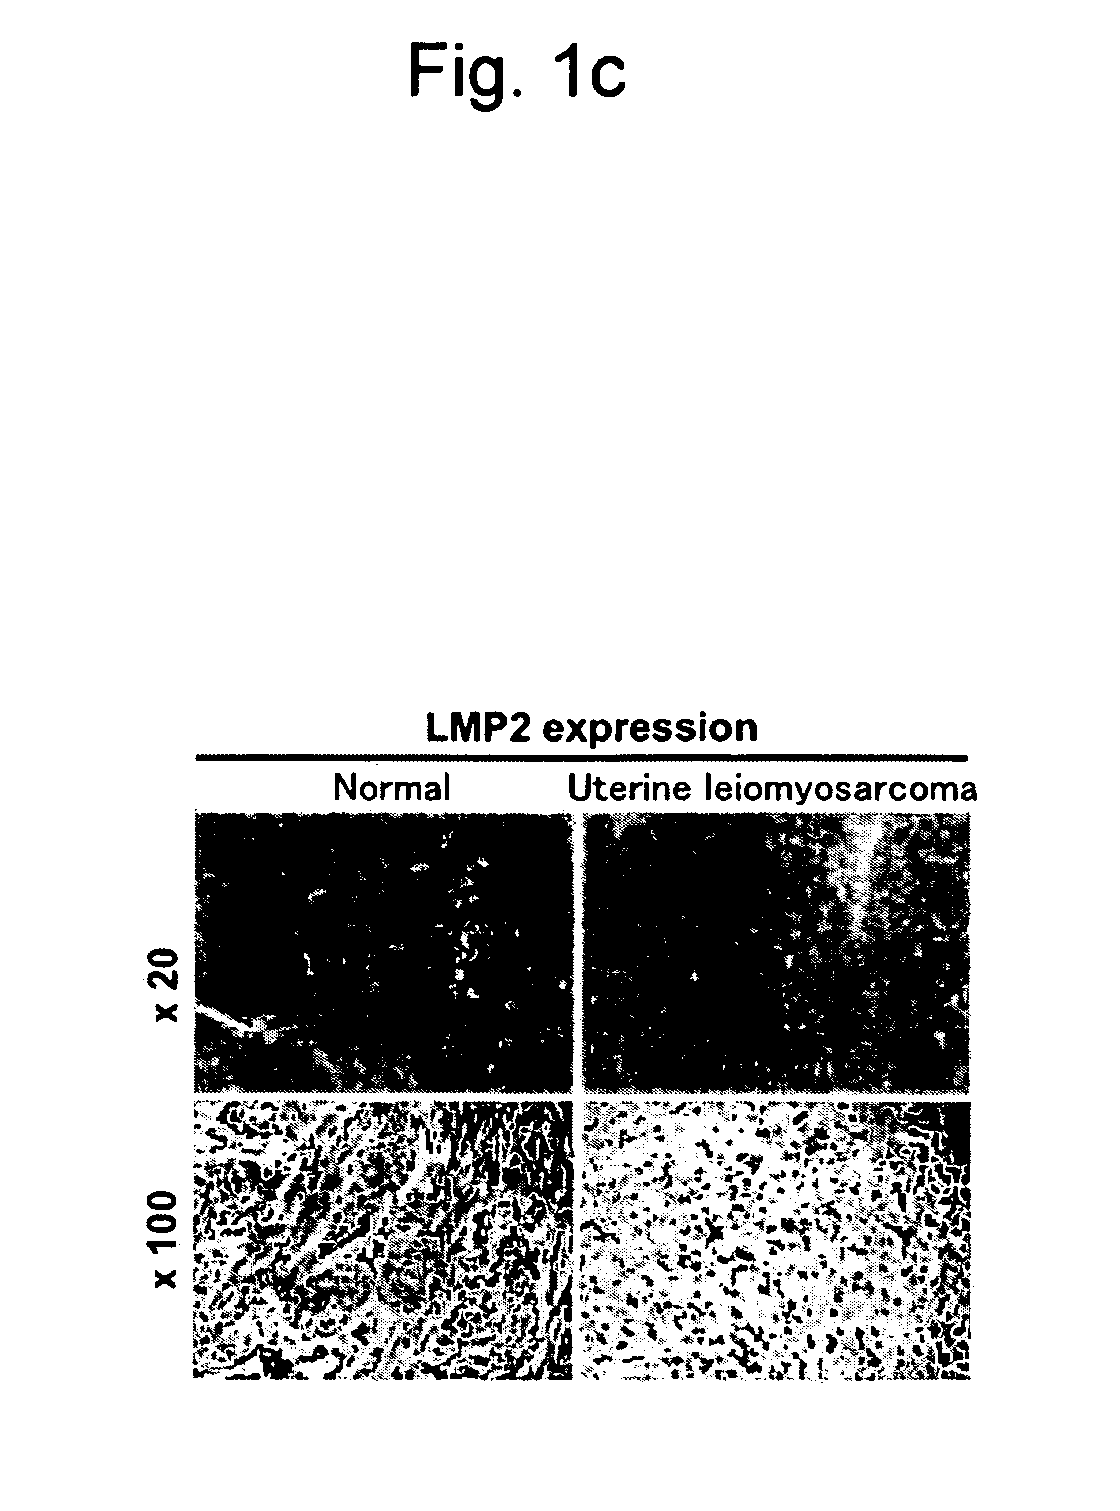 Detection of uterine leiomyosarcoma using lmp2